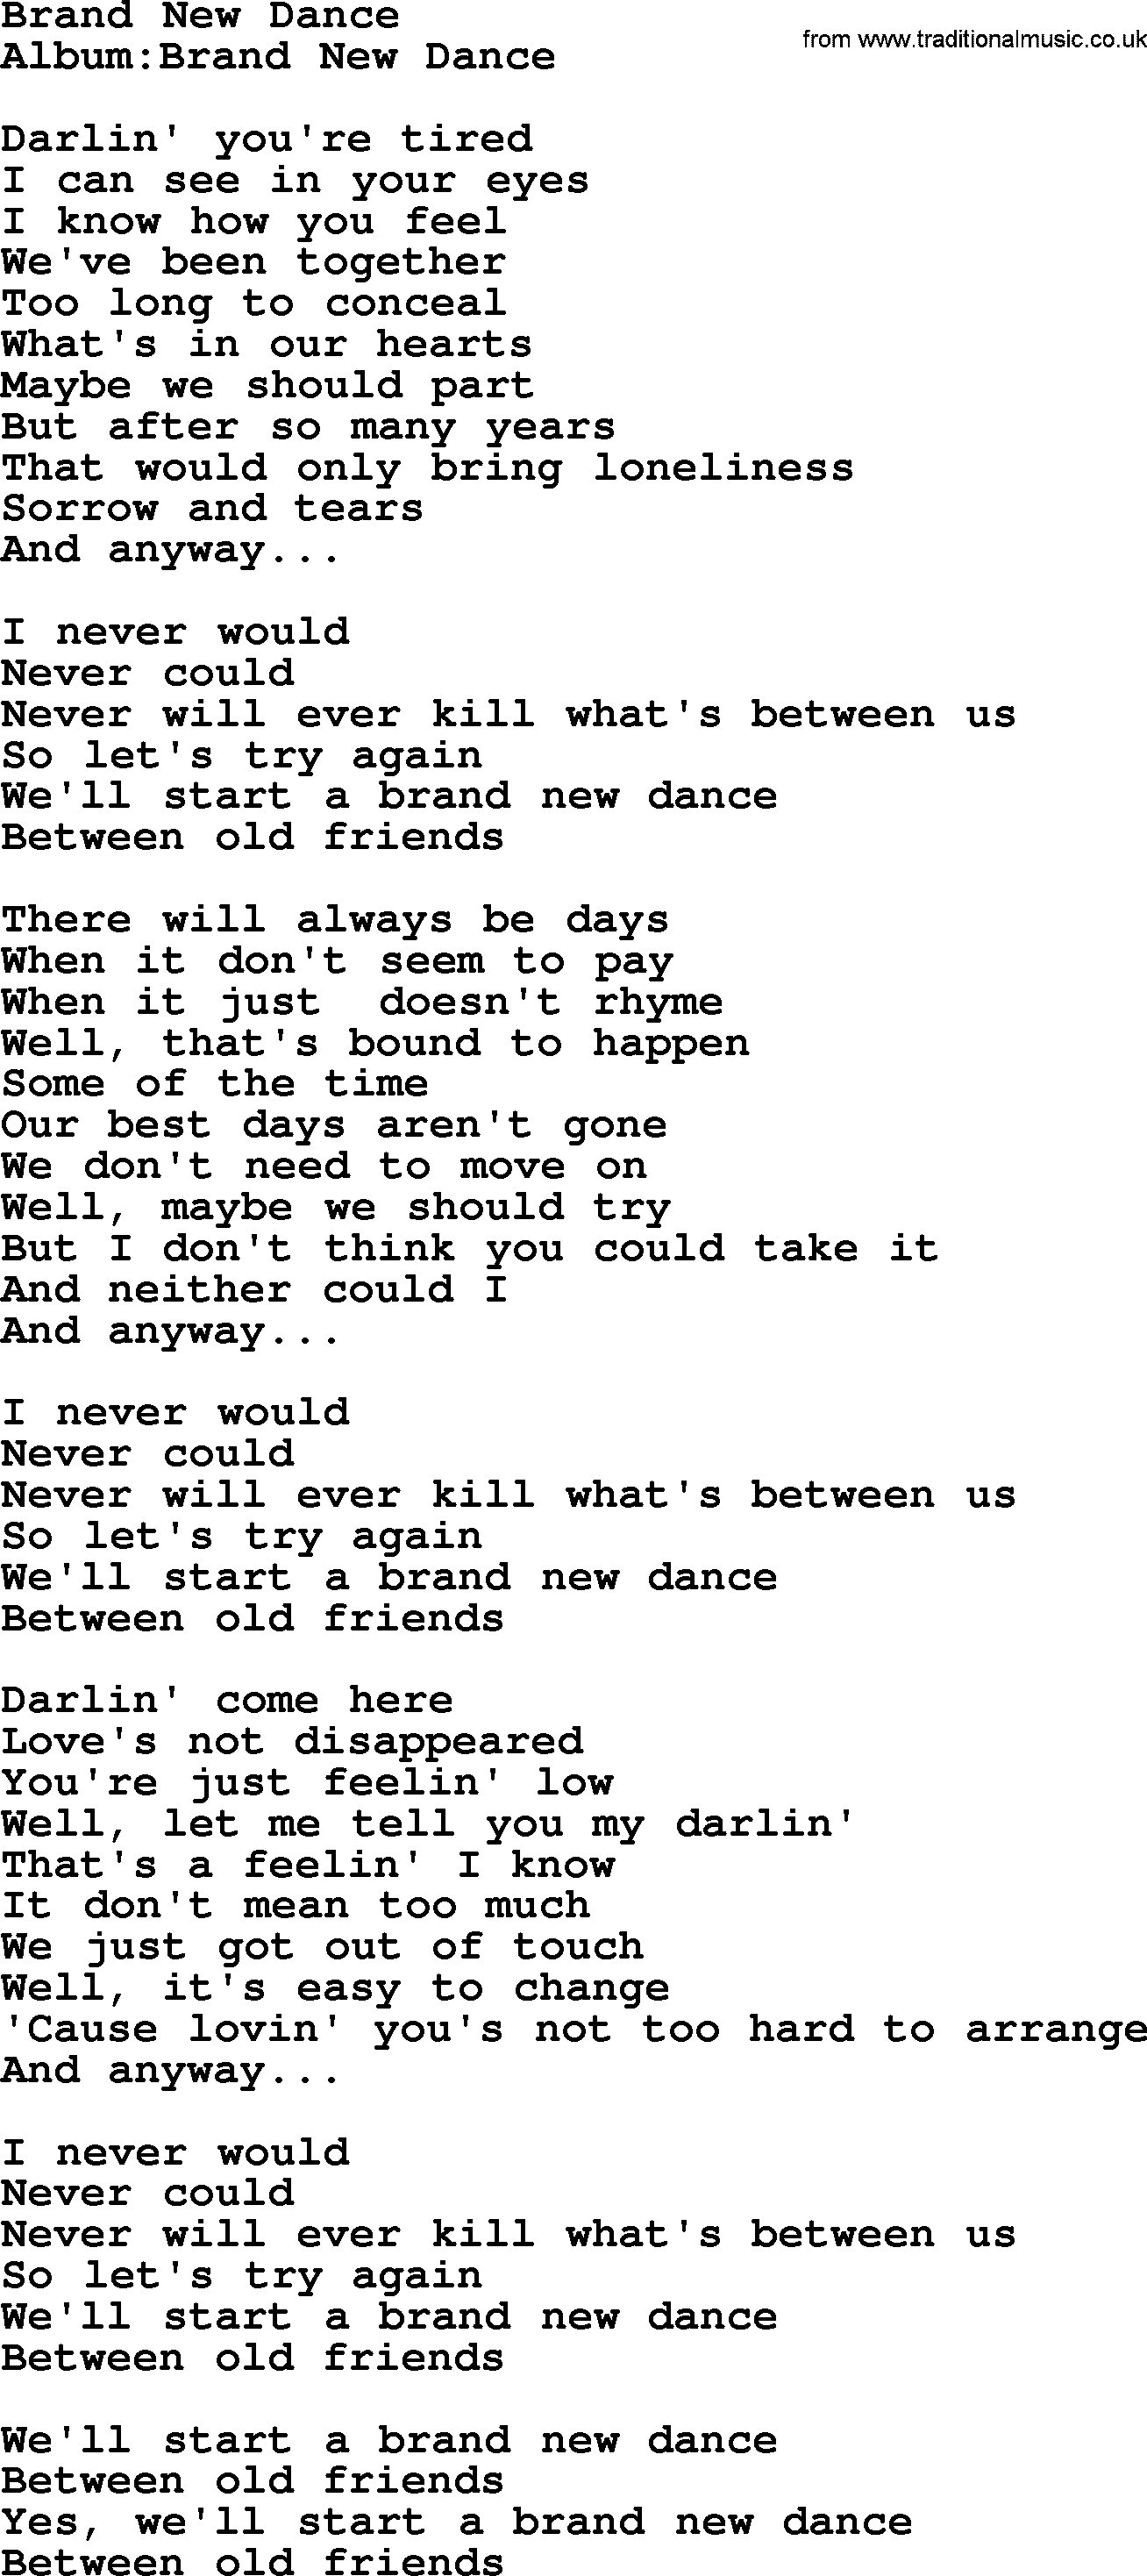 Emmylou Harris song: Brand New Dance lyrics